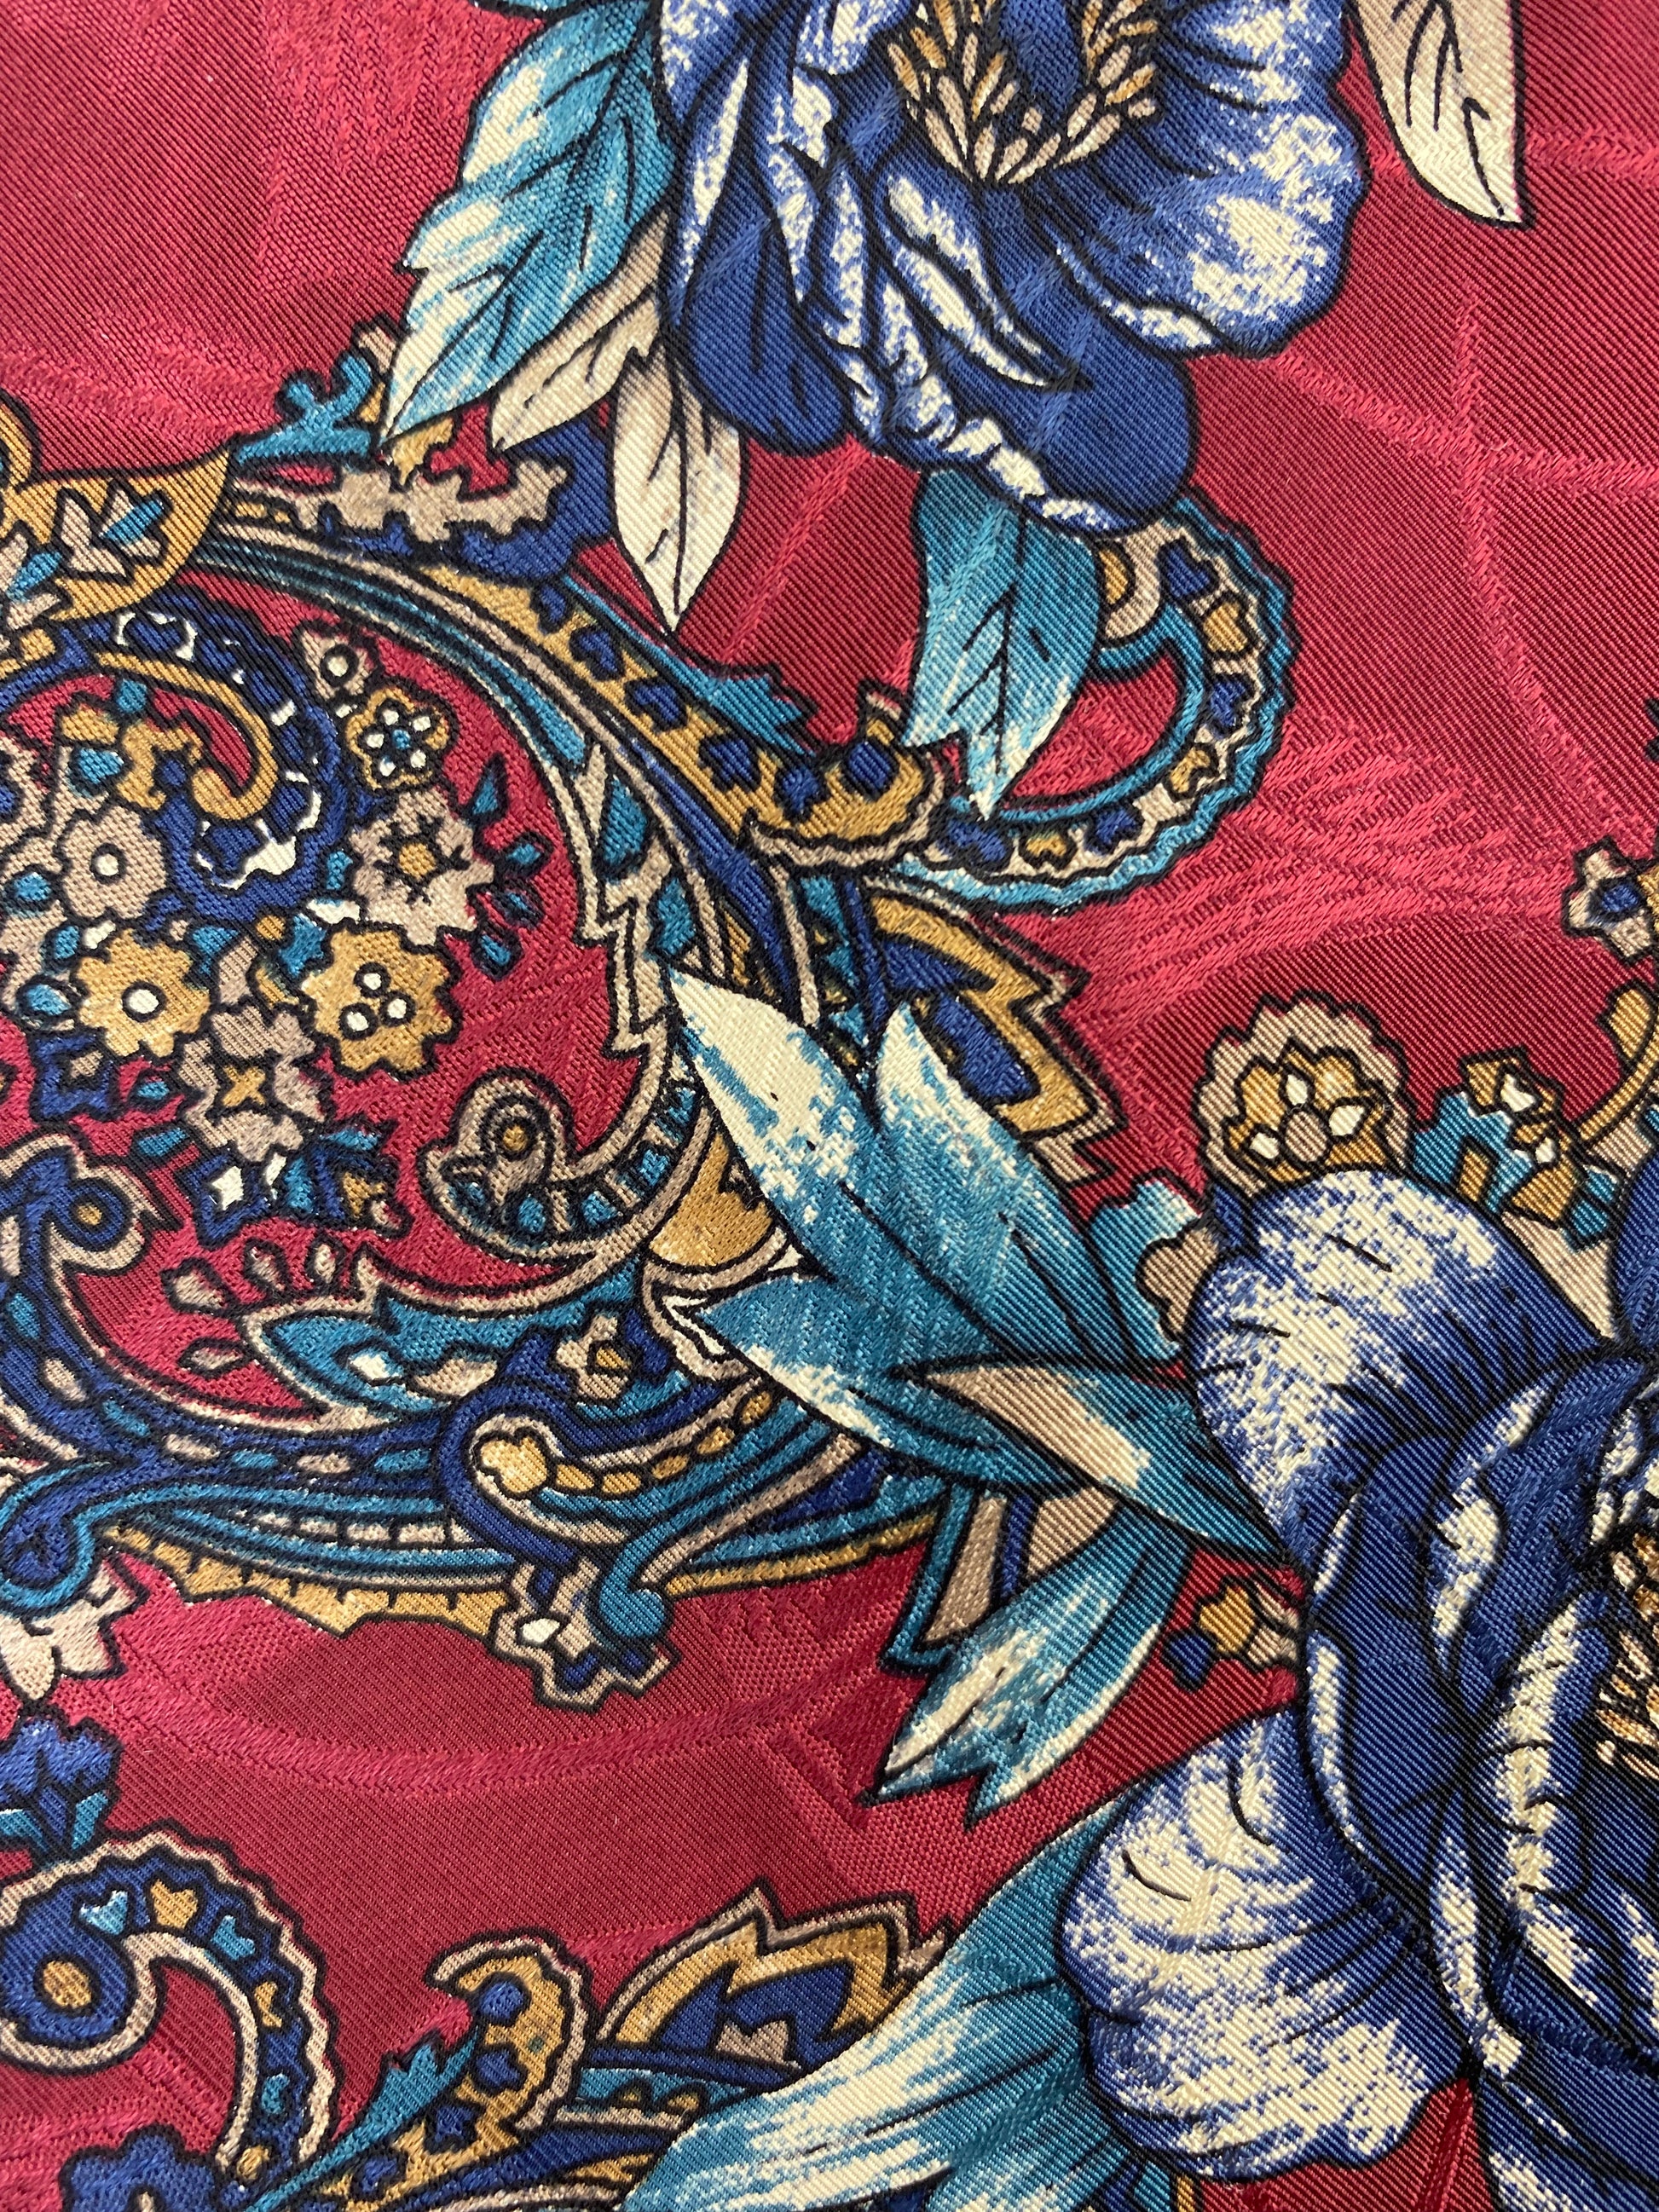 Close-up of: 90s Deadstock Silk Necktie, Men's Vintage Wine/ Navy Oriental Floral Pattern Tie, NOS